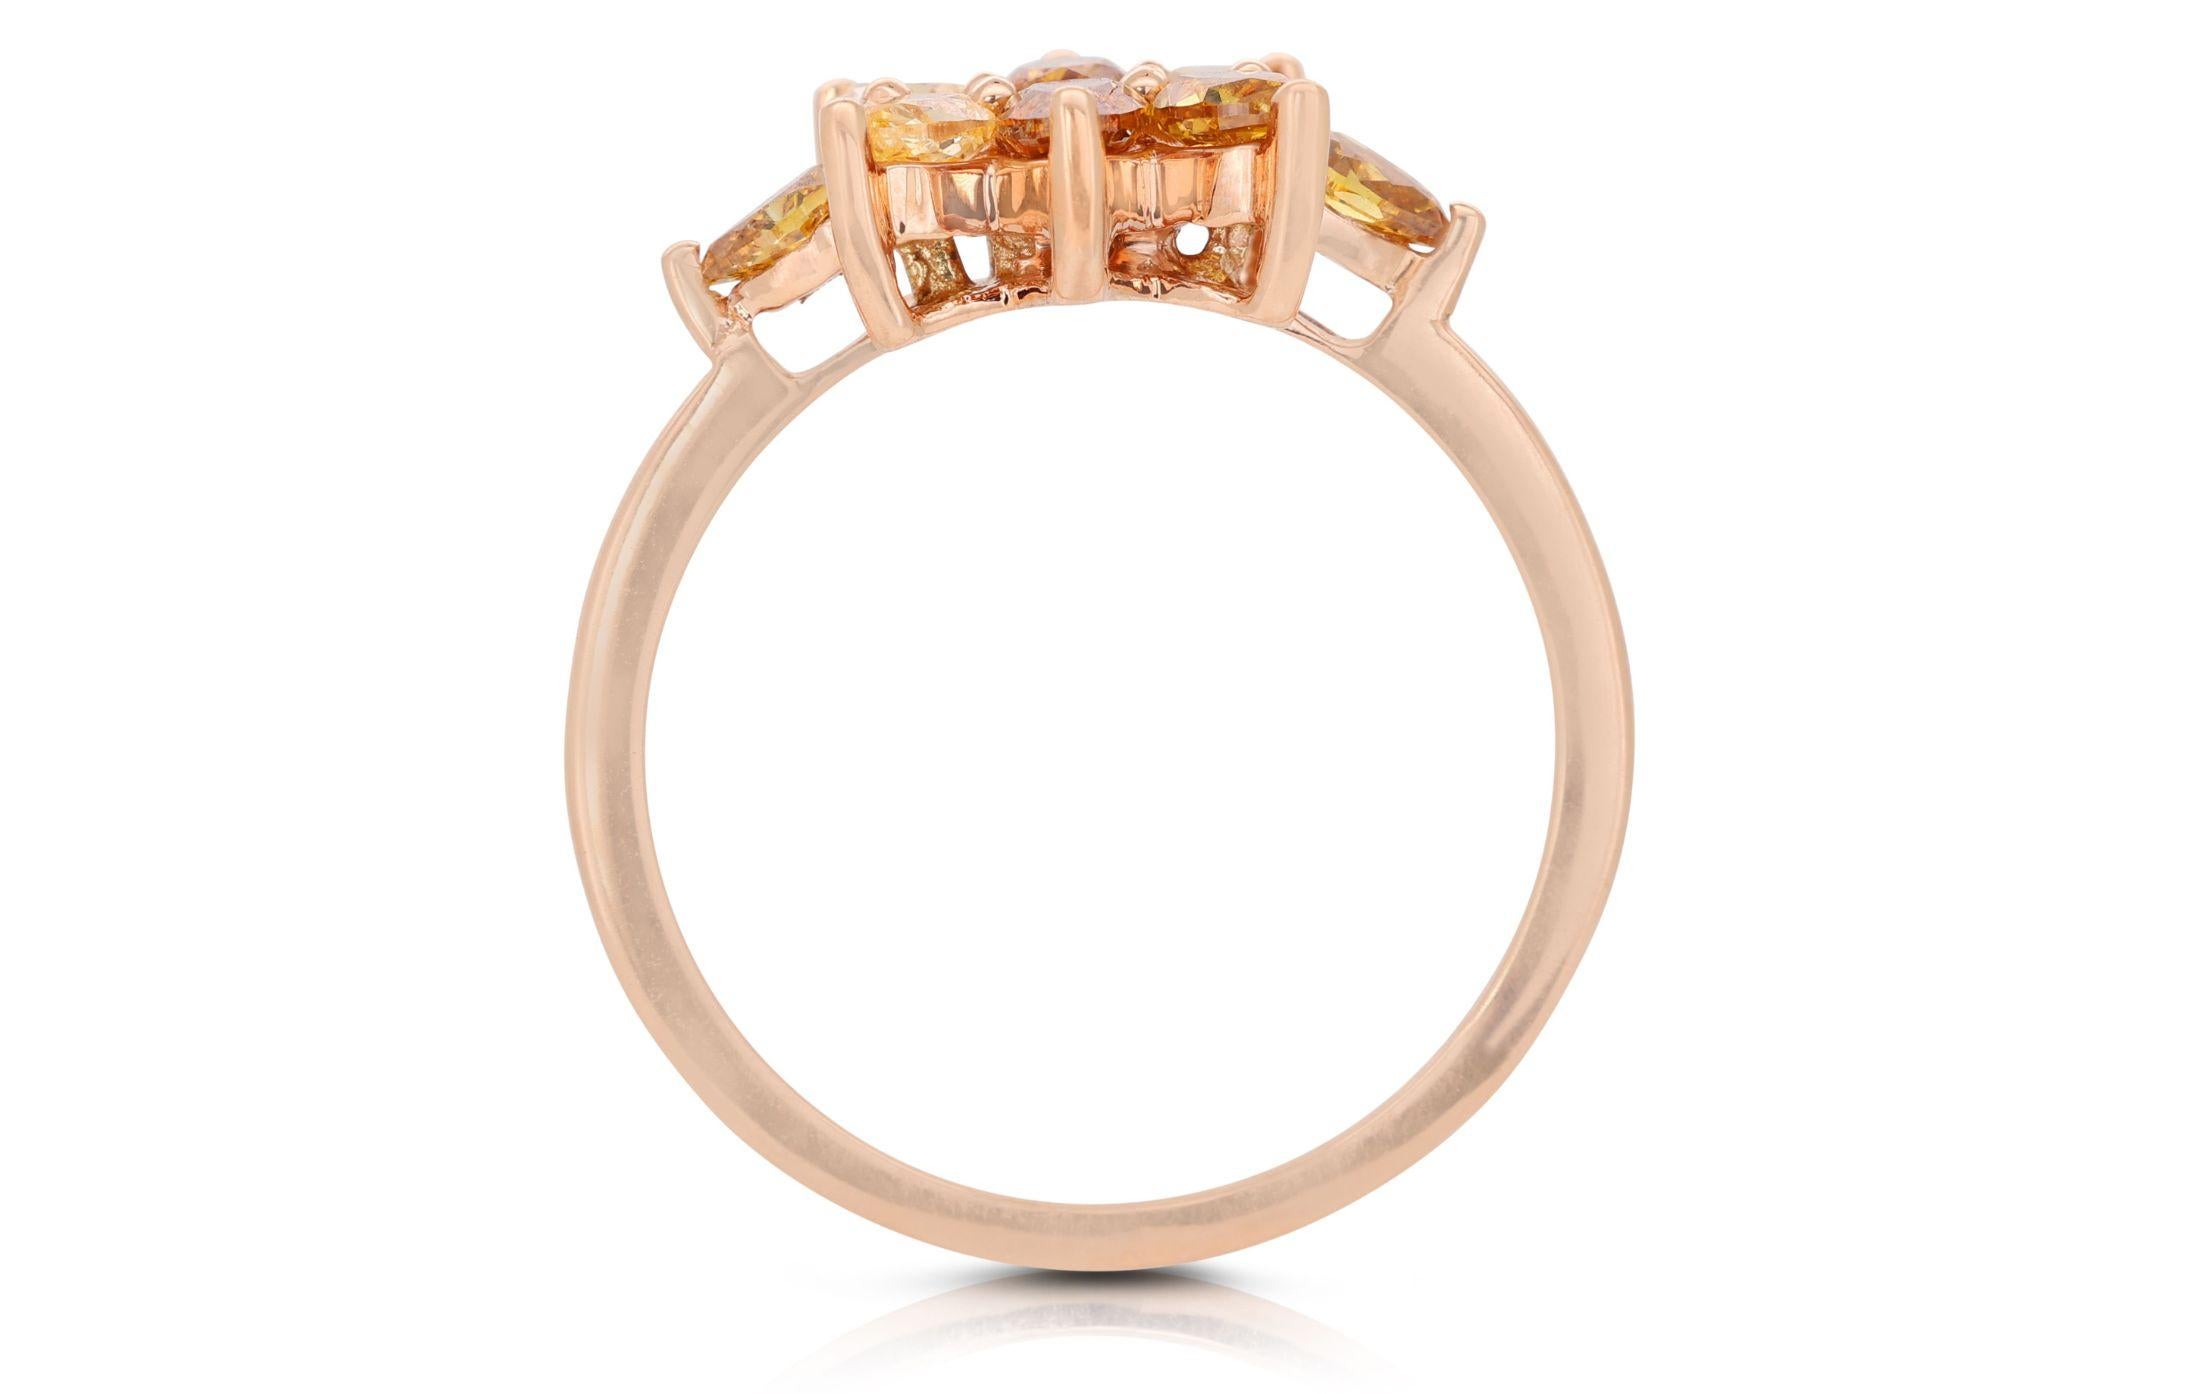 Gorgeous 1.02ct Flower-designed Diamond Ring in 14K Rose Gold For Sale 1